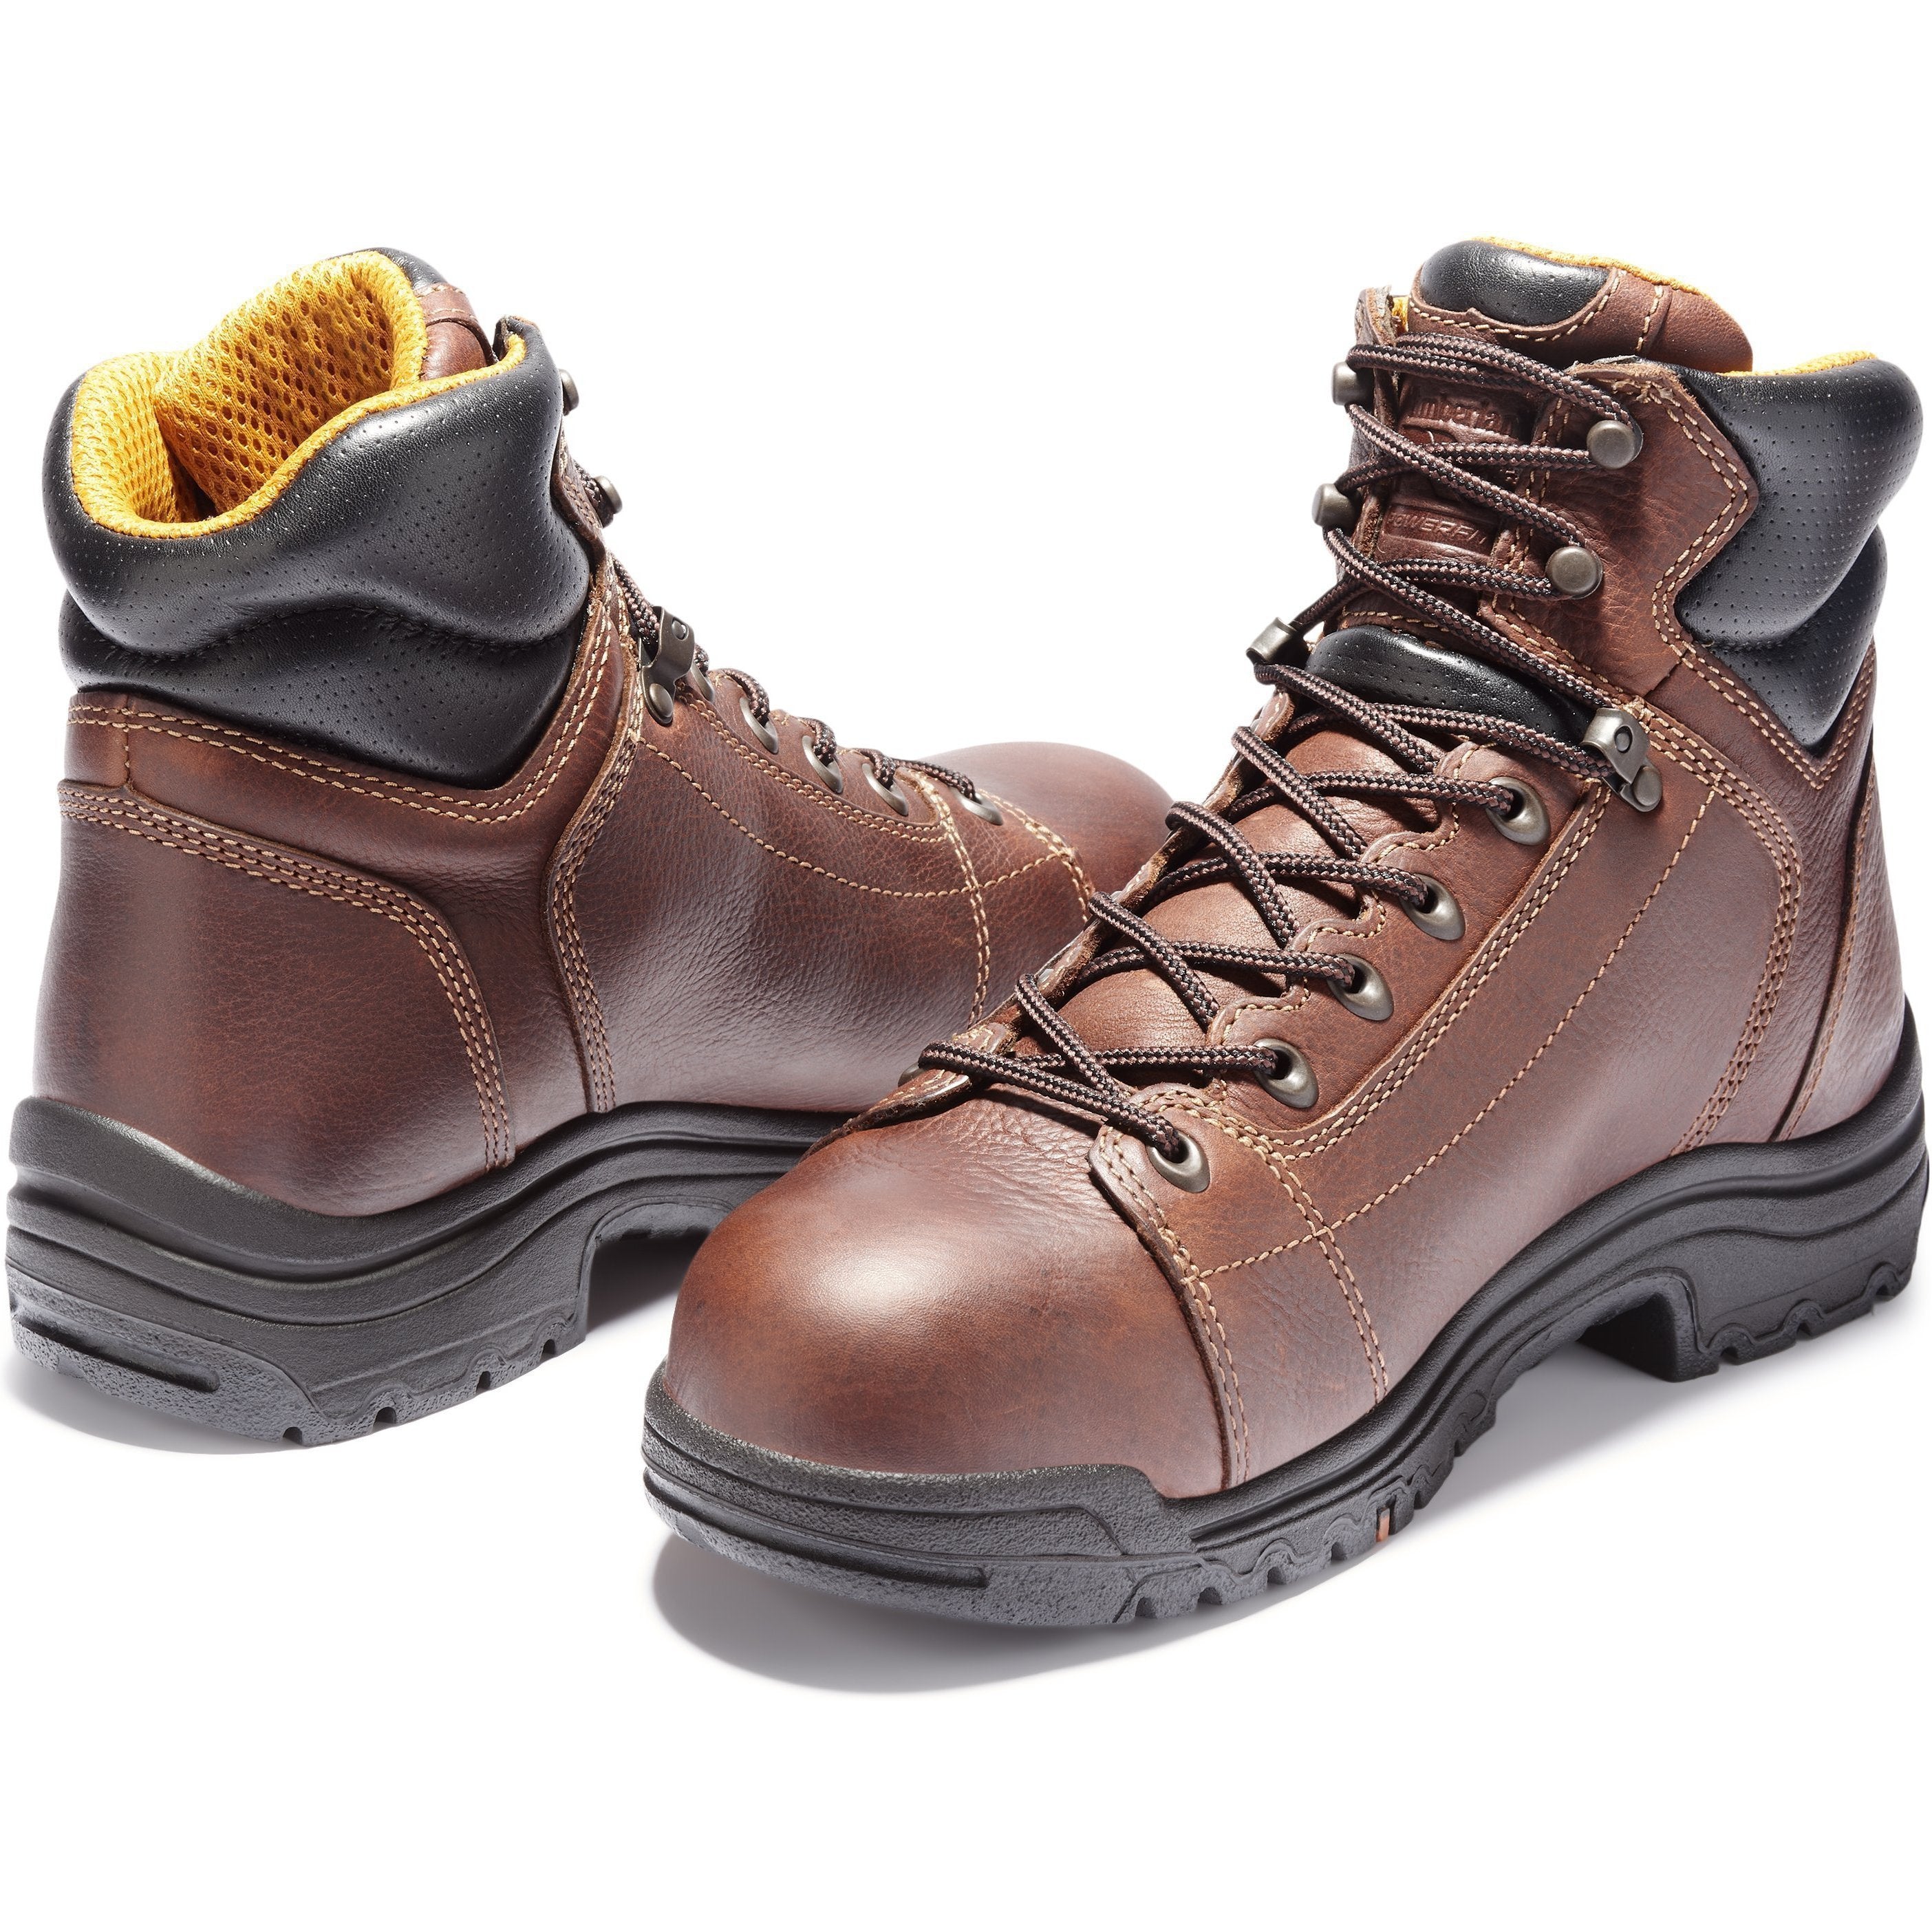 Timberland PRO Men's TiTAN 6" Alloy Toe Work Boots -Brown- TB050506242  - Overlook Boots